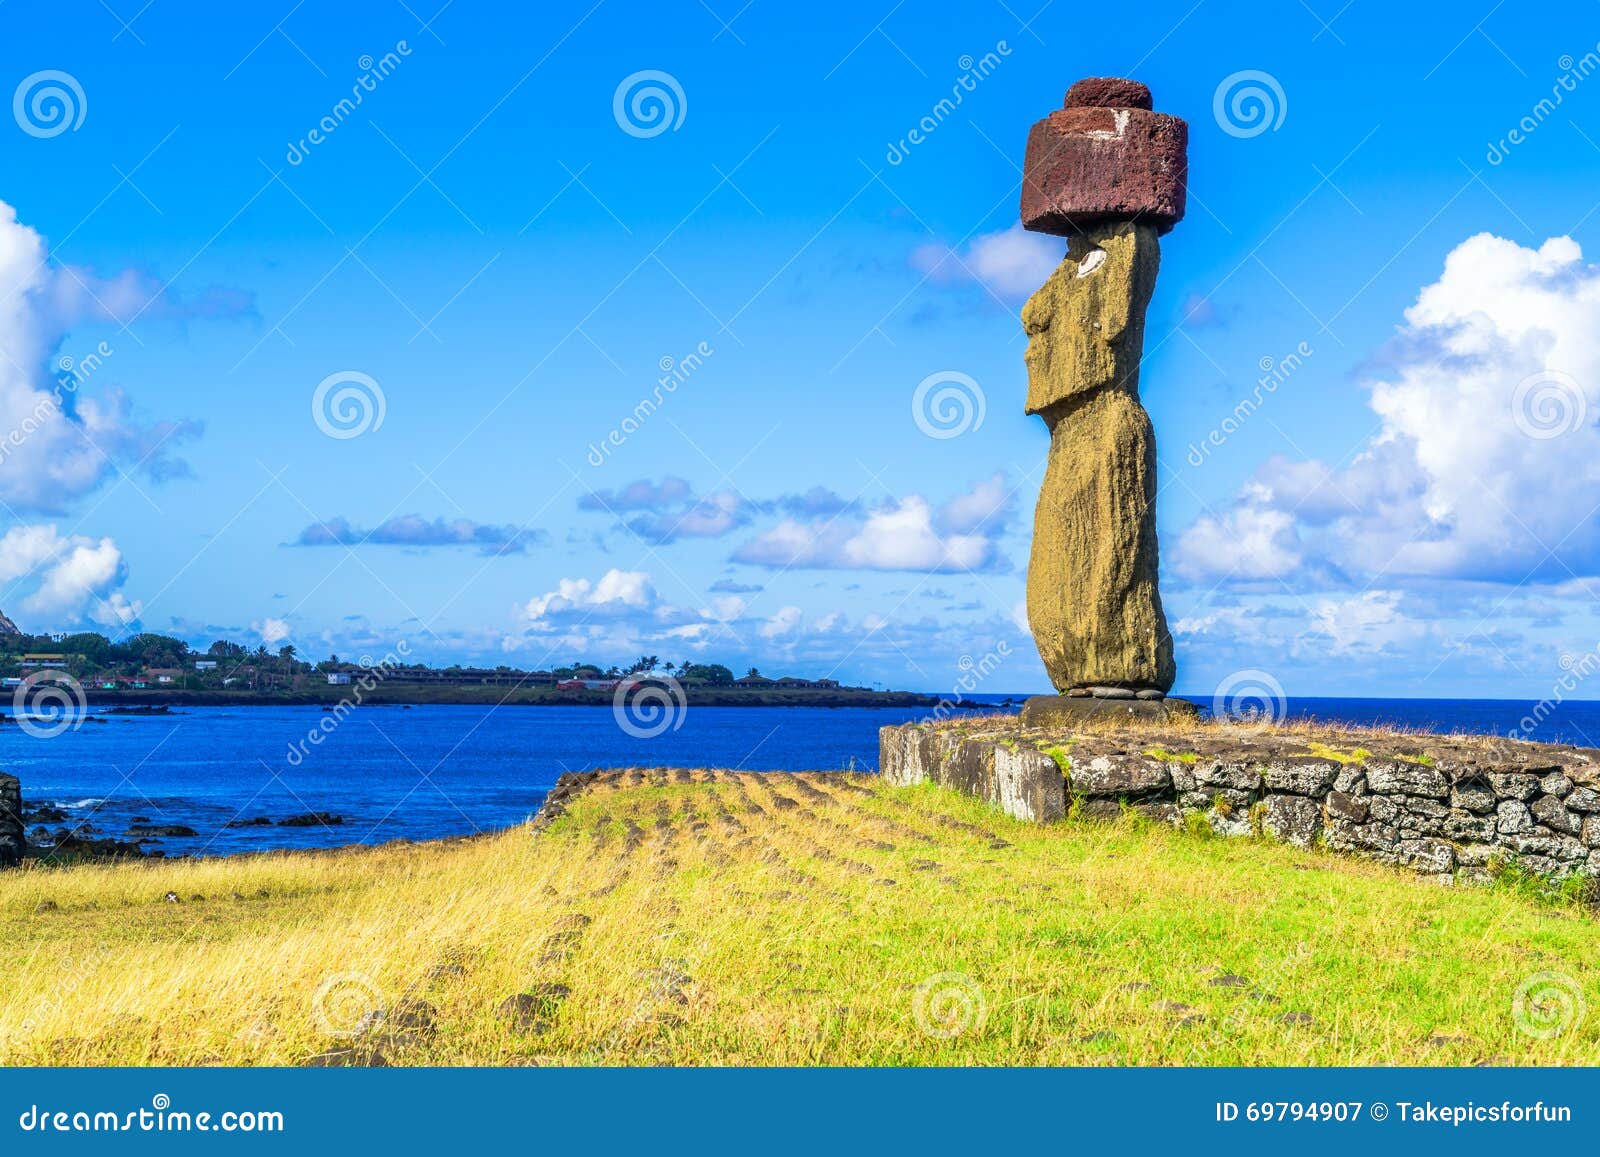 moai at ahu ko te riku